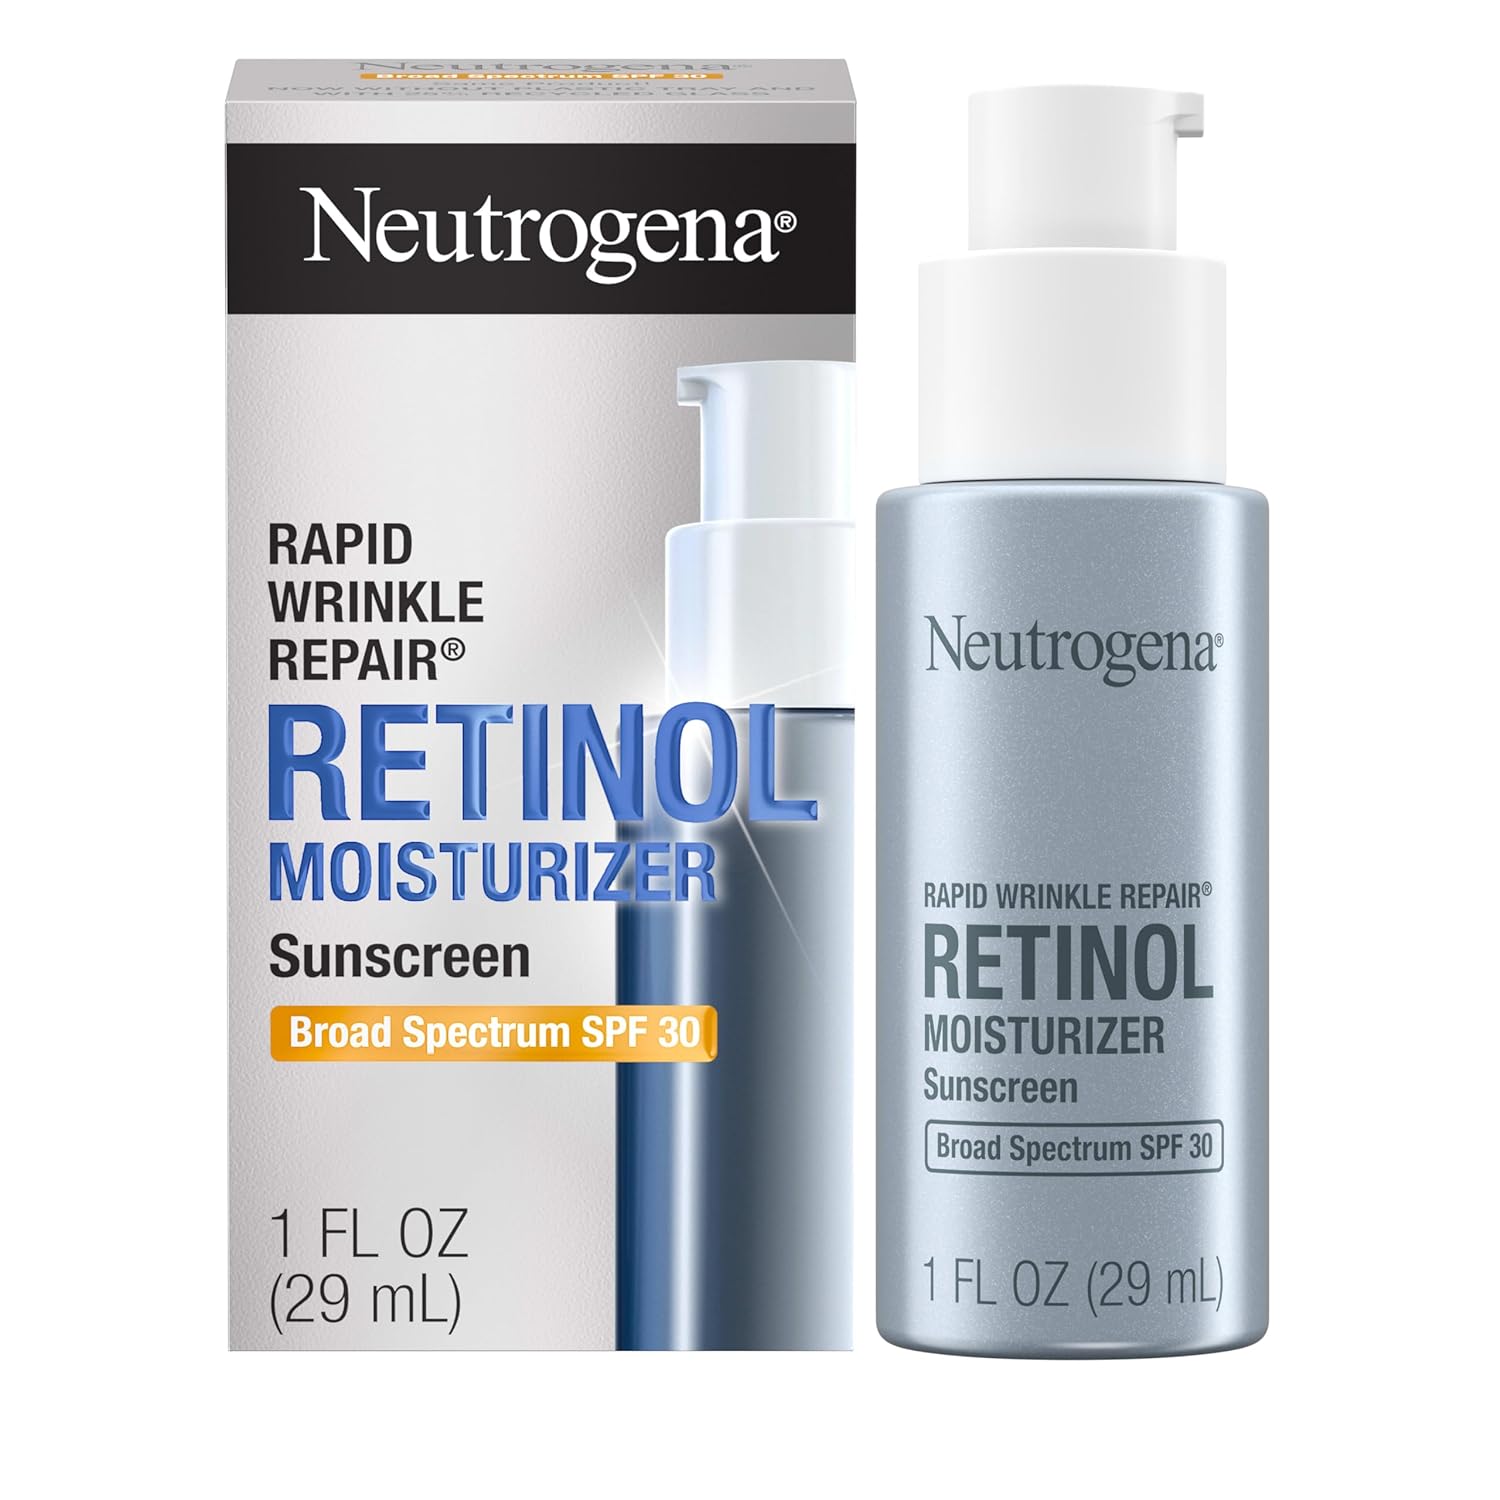 Neutrogena Rapid Wrinkle Repair Retinol Face Moisturizer with SPF 30 Sunscreen, Daily Anti-Aging Fac